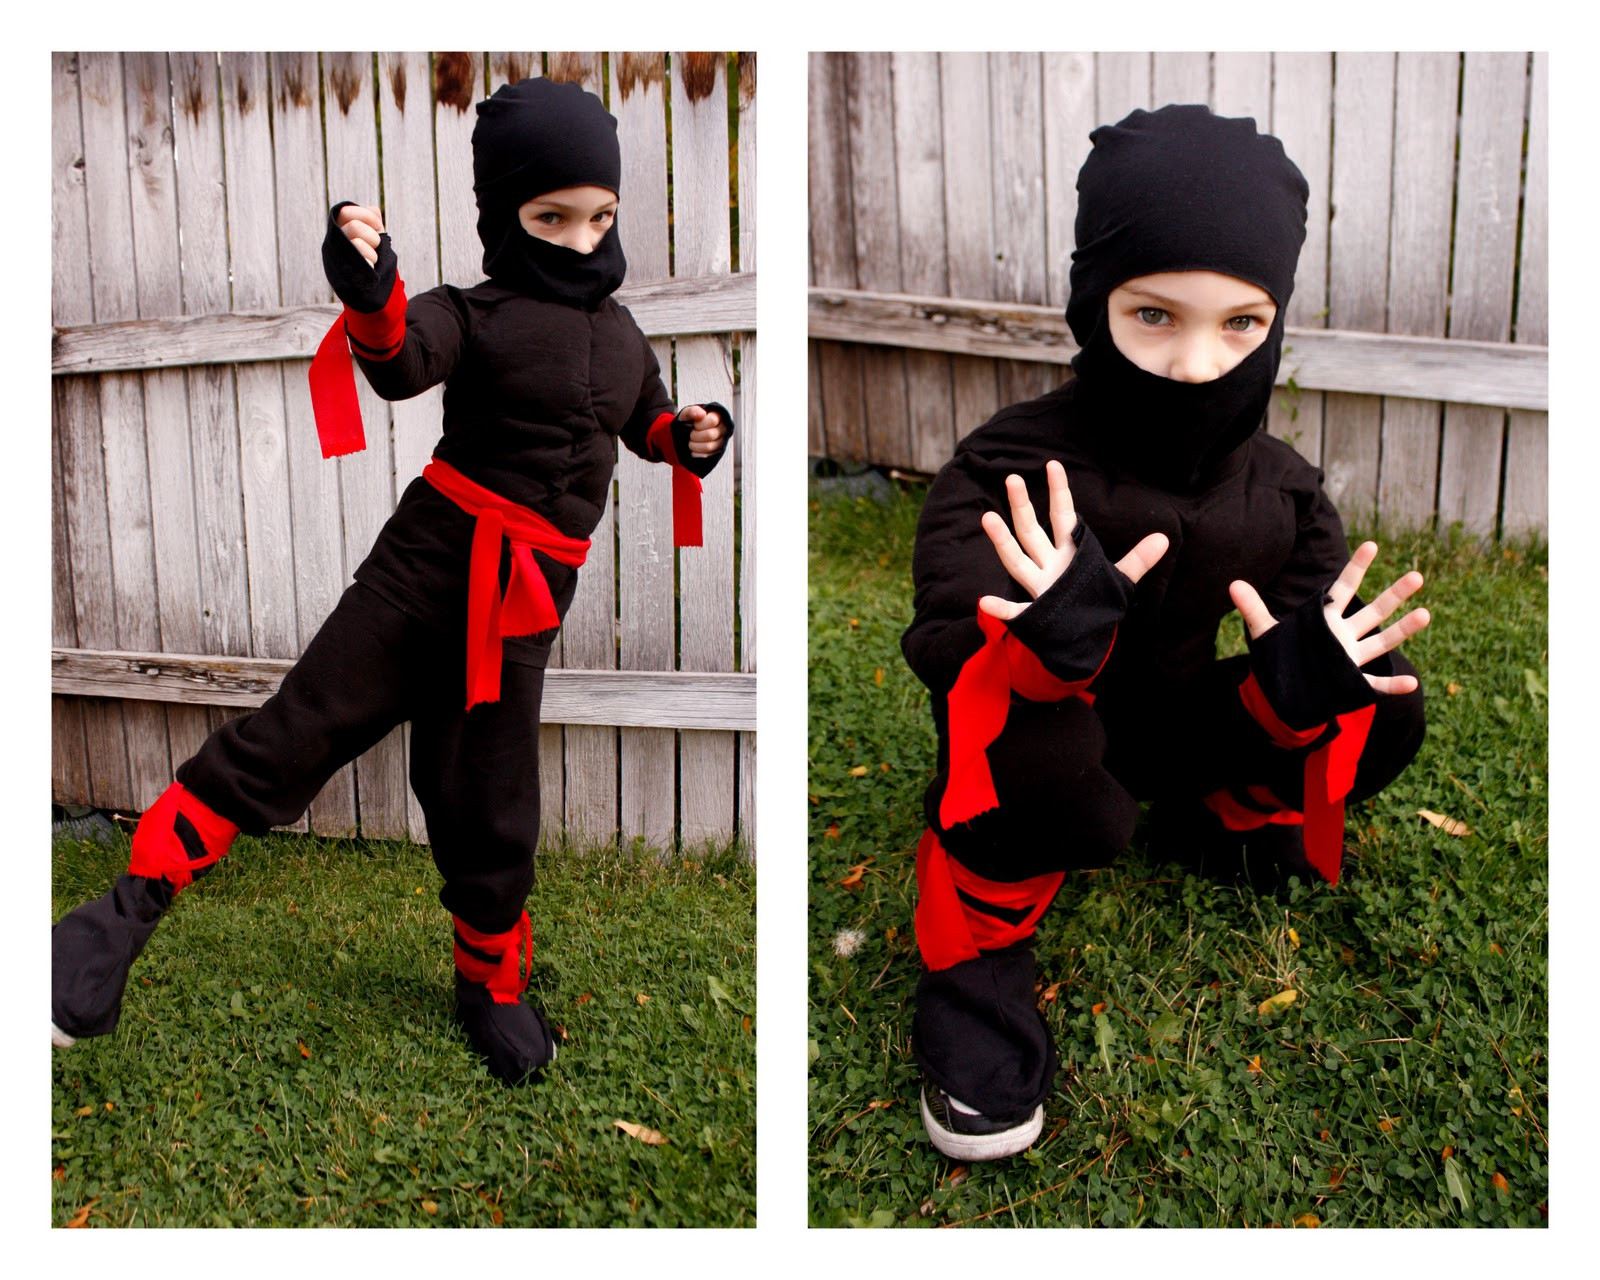 Best ideas about DIY Ninja Costume
. Save or Pin ninja costume Now.